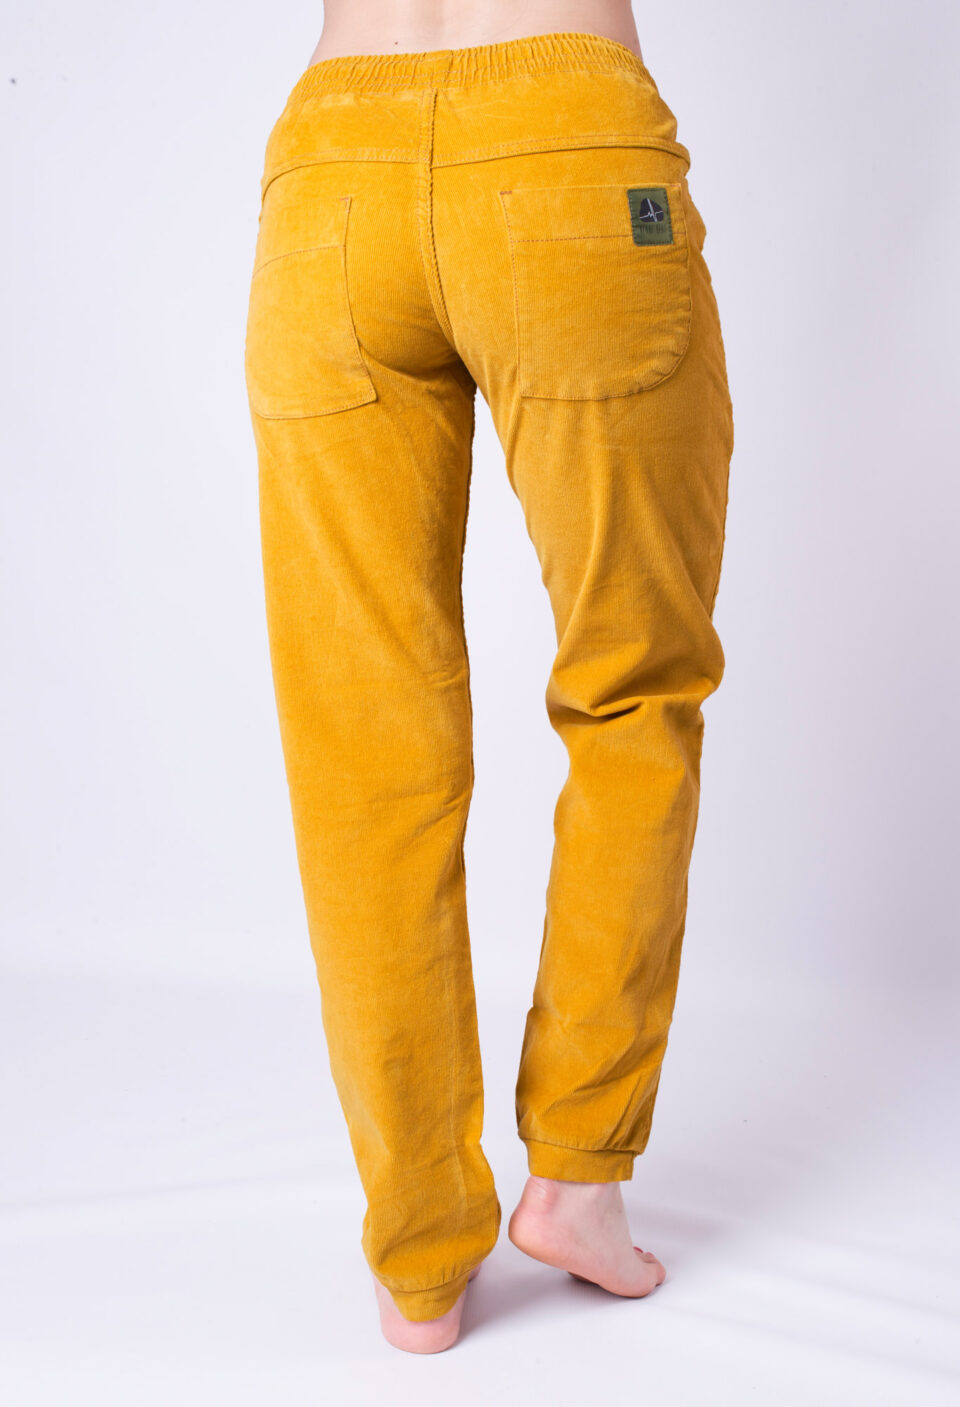 Rocket Pocket corduroy pants - yellow mustard